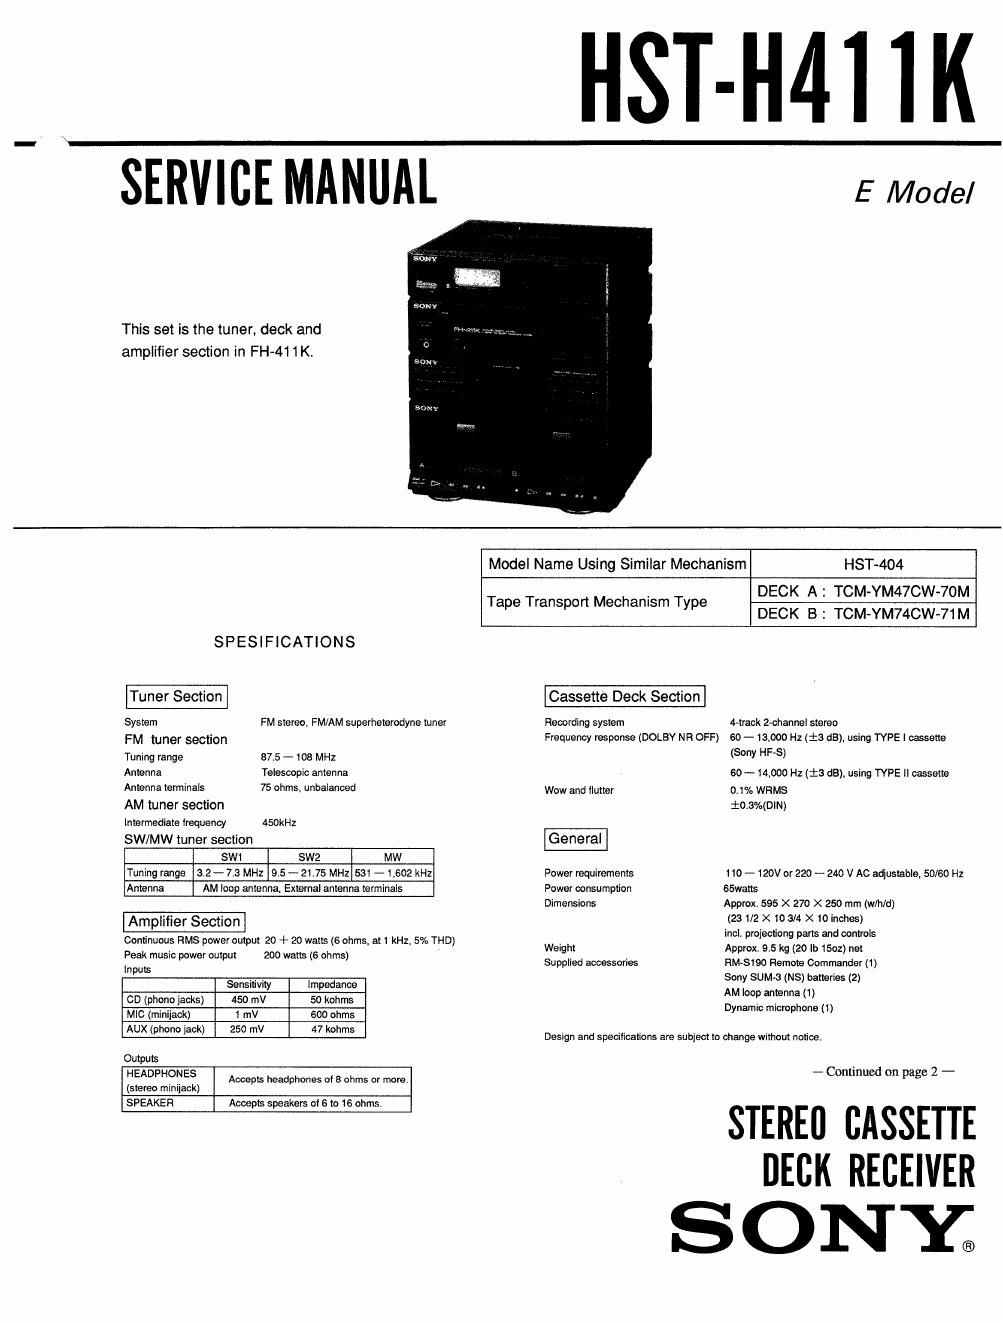 sony hsth 411 k service manual